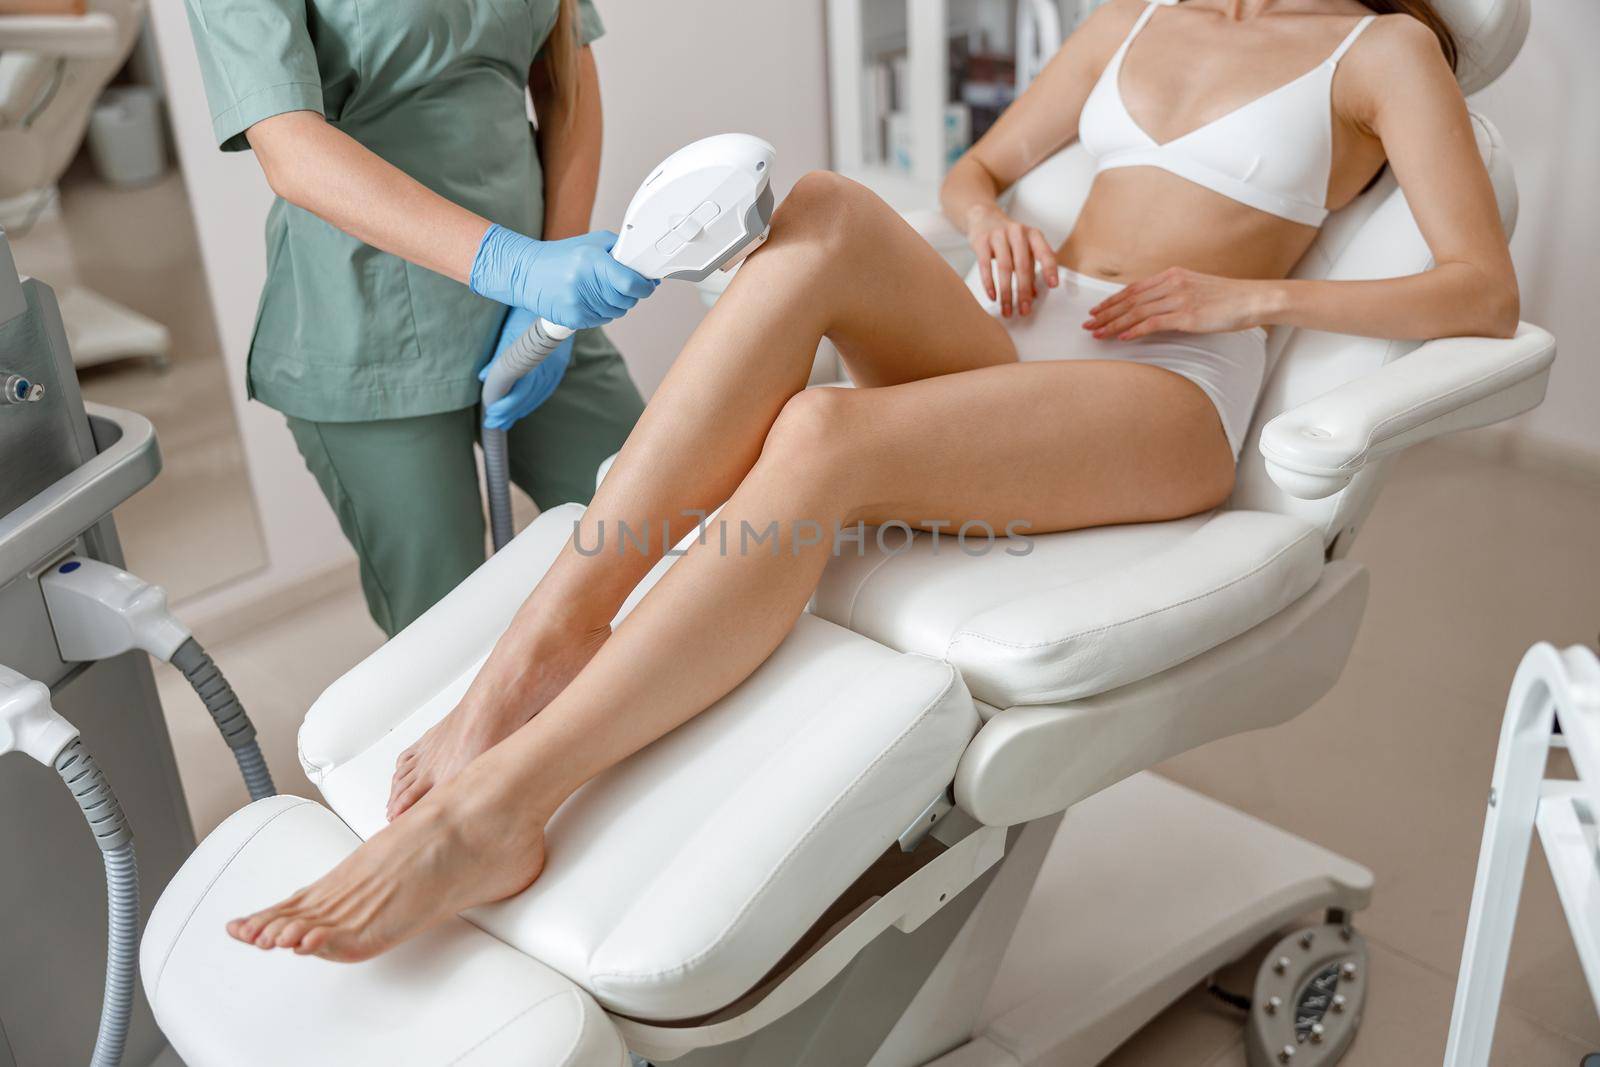 Photo epilation, hair removal procedure on legs skin in beauty salon by Yaroslav_astakhov